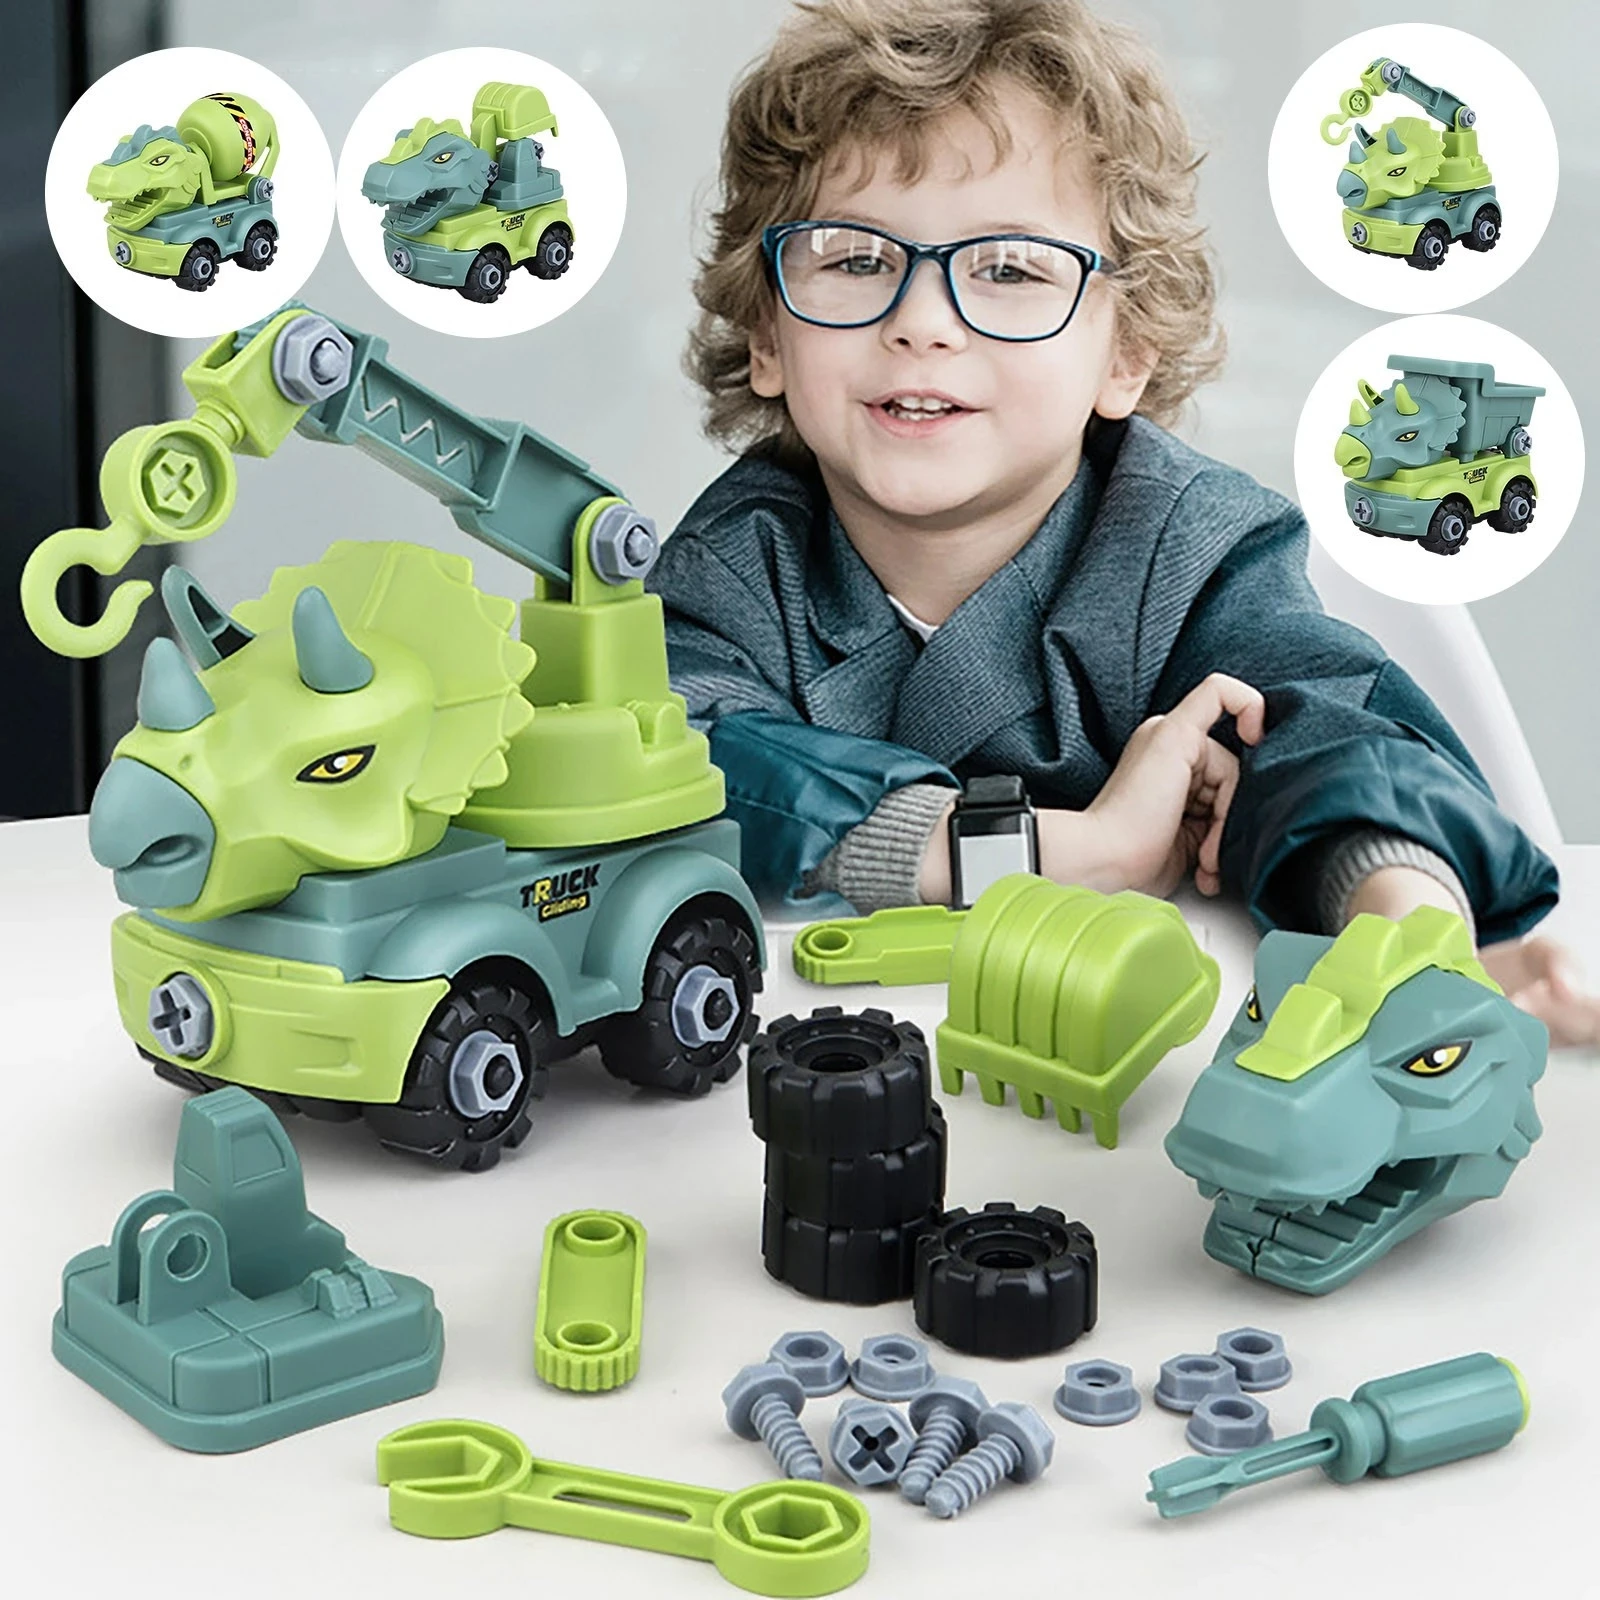 

Childrens Construction Toy Dinosaur Engineering Excavator Dump Truck Education Children Disassemble DIY Model Car Childrens Gift